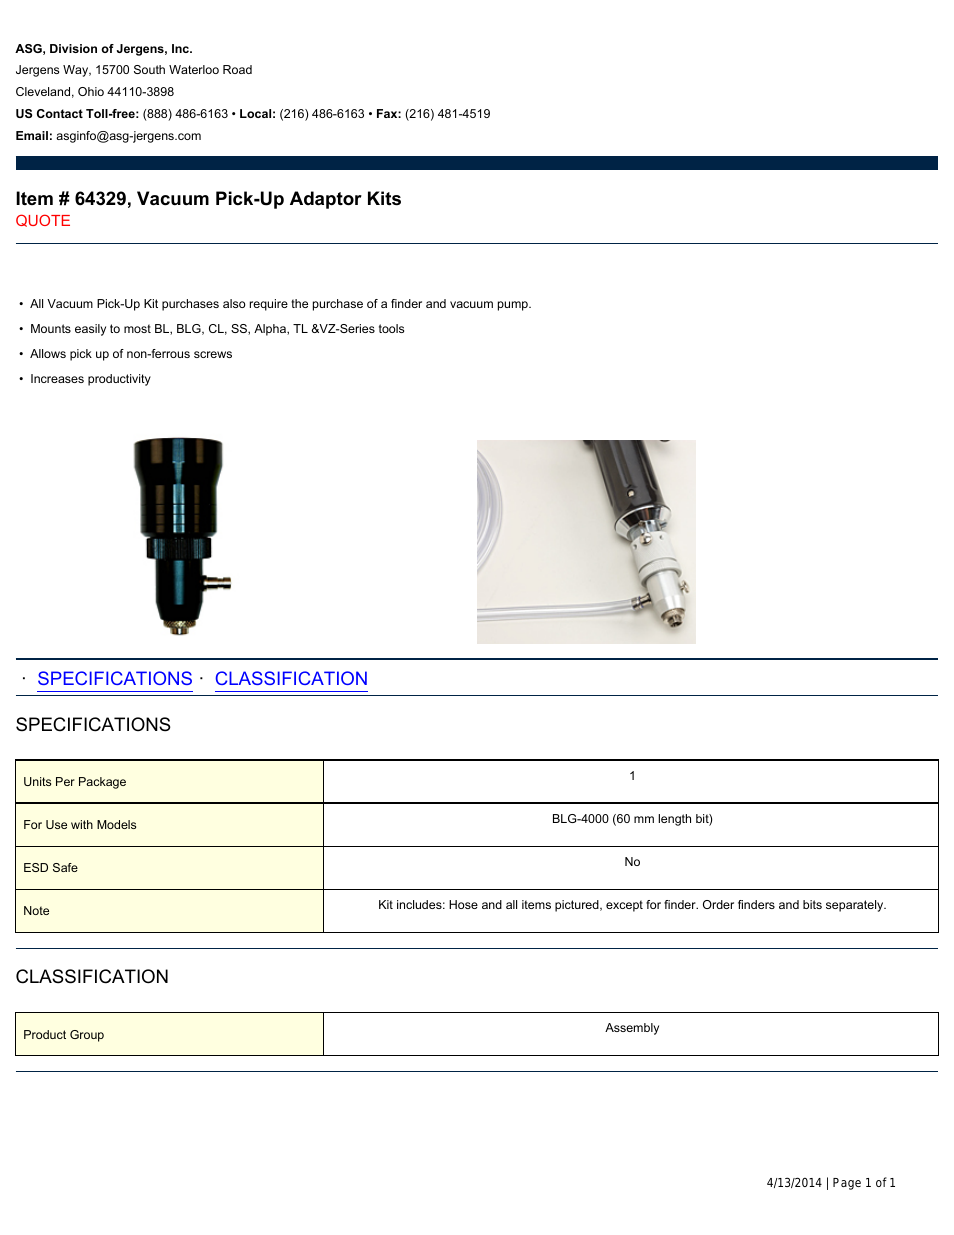 64329 Vacuum Pick-Up Adaptor Kits